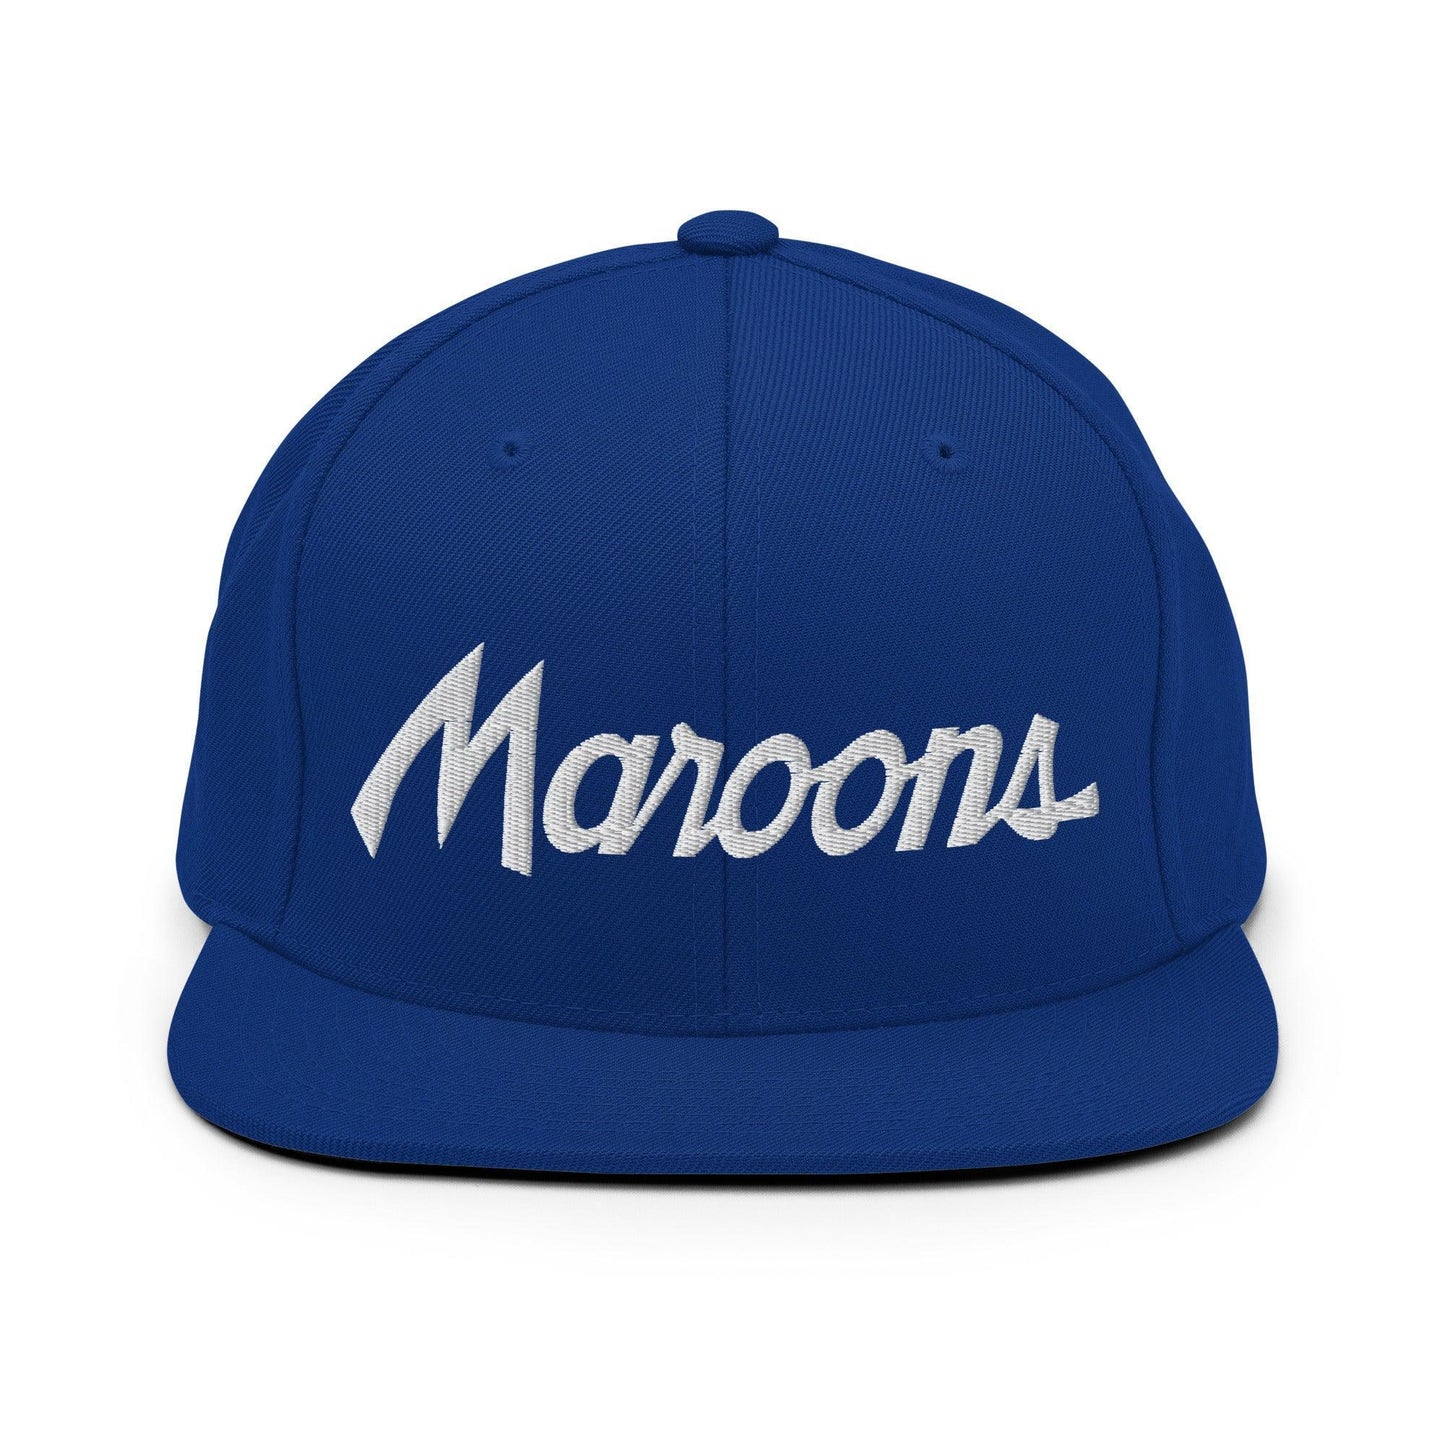 Maroons School Mascot Script Snapback Hat Royal Blue